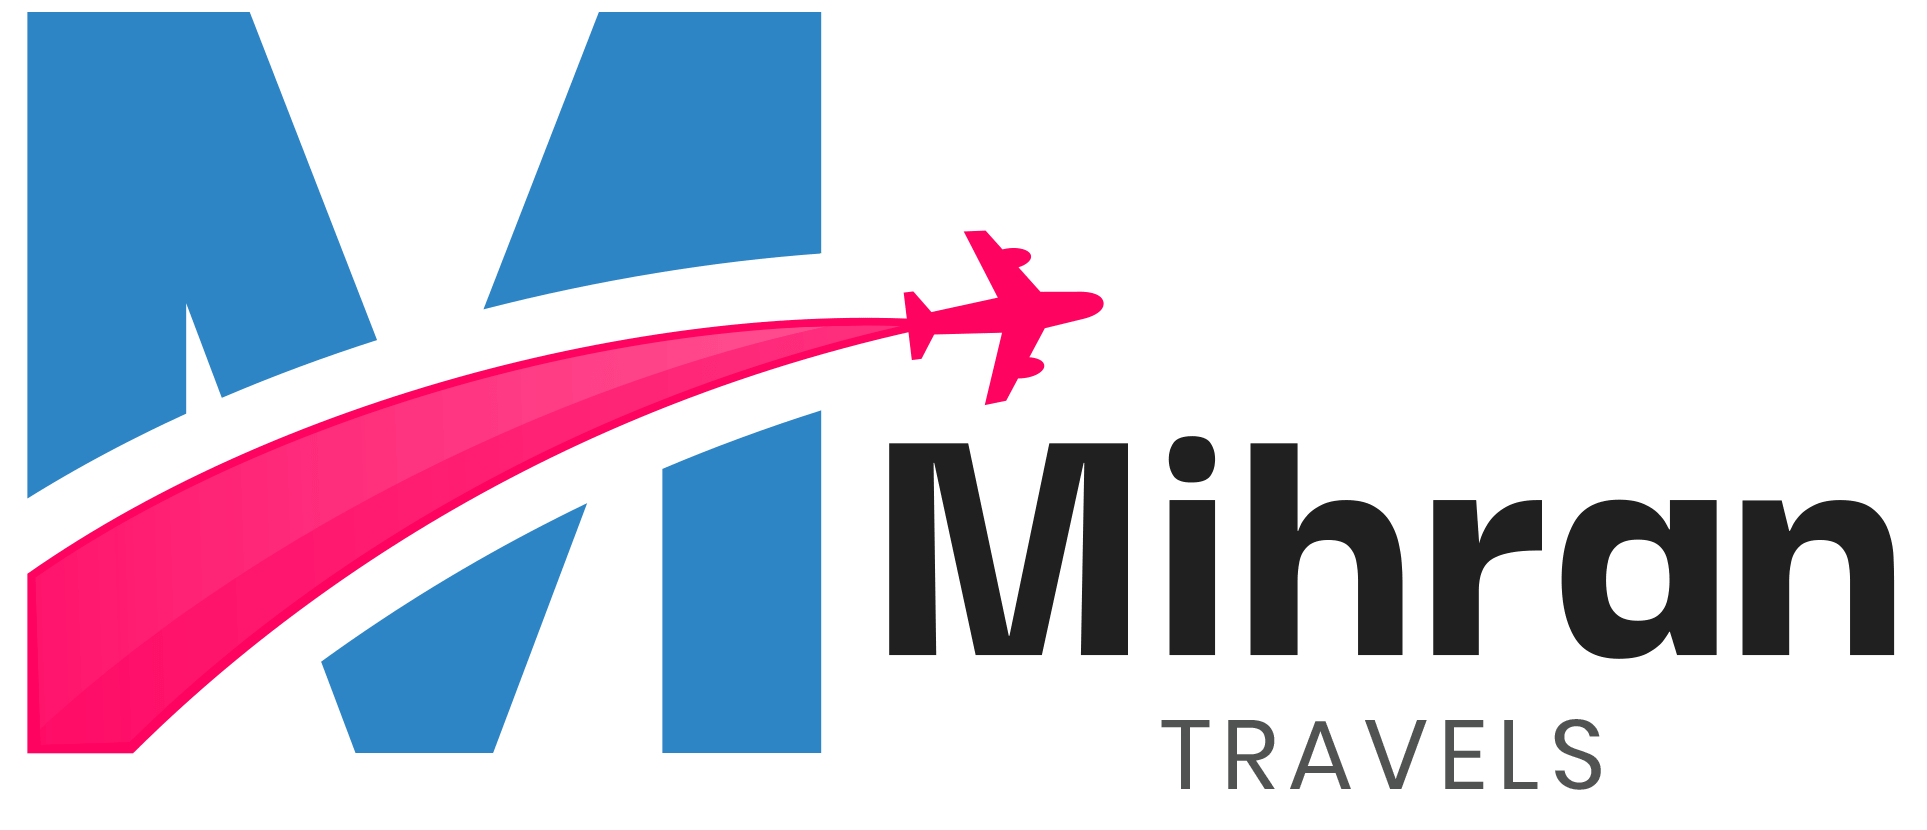 Mihran travels logo